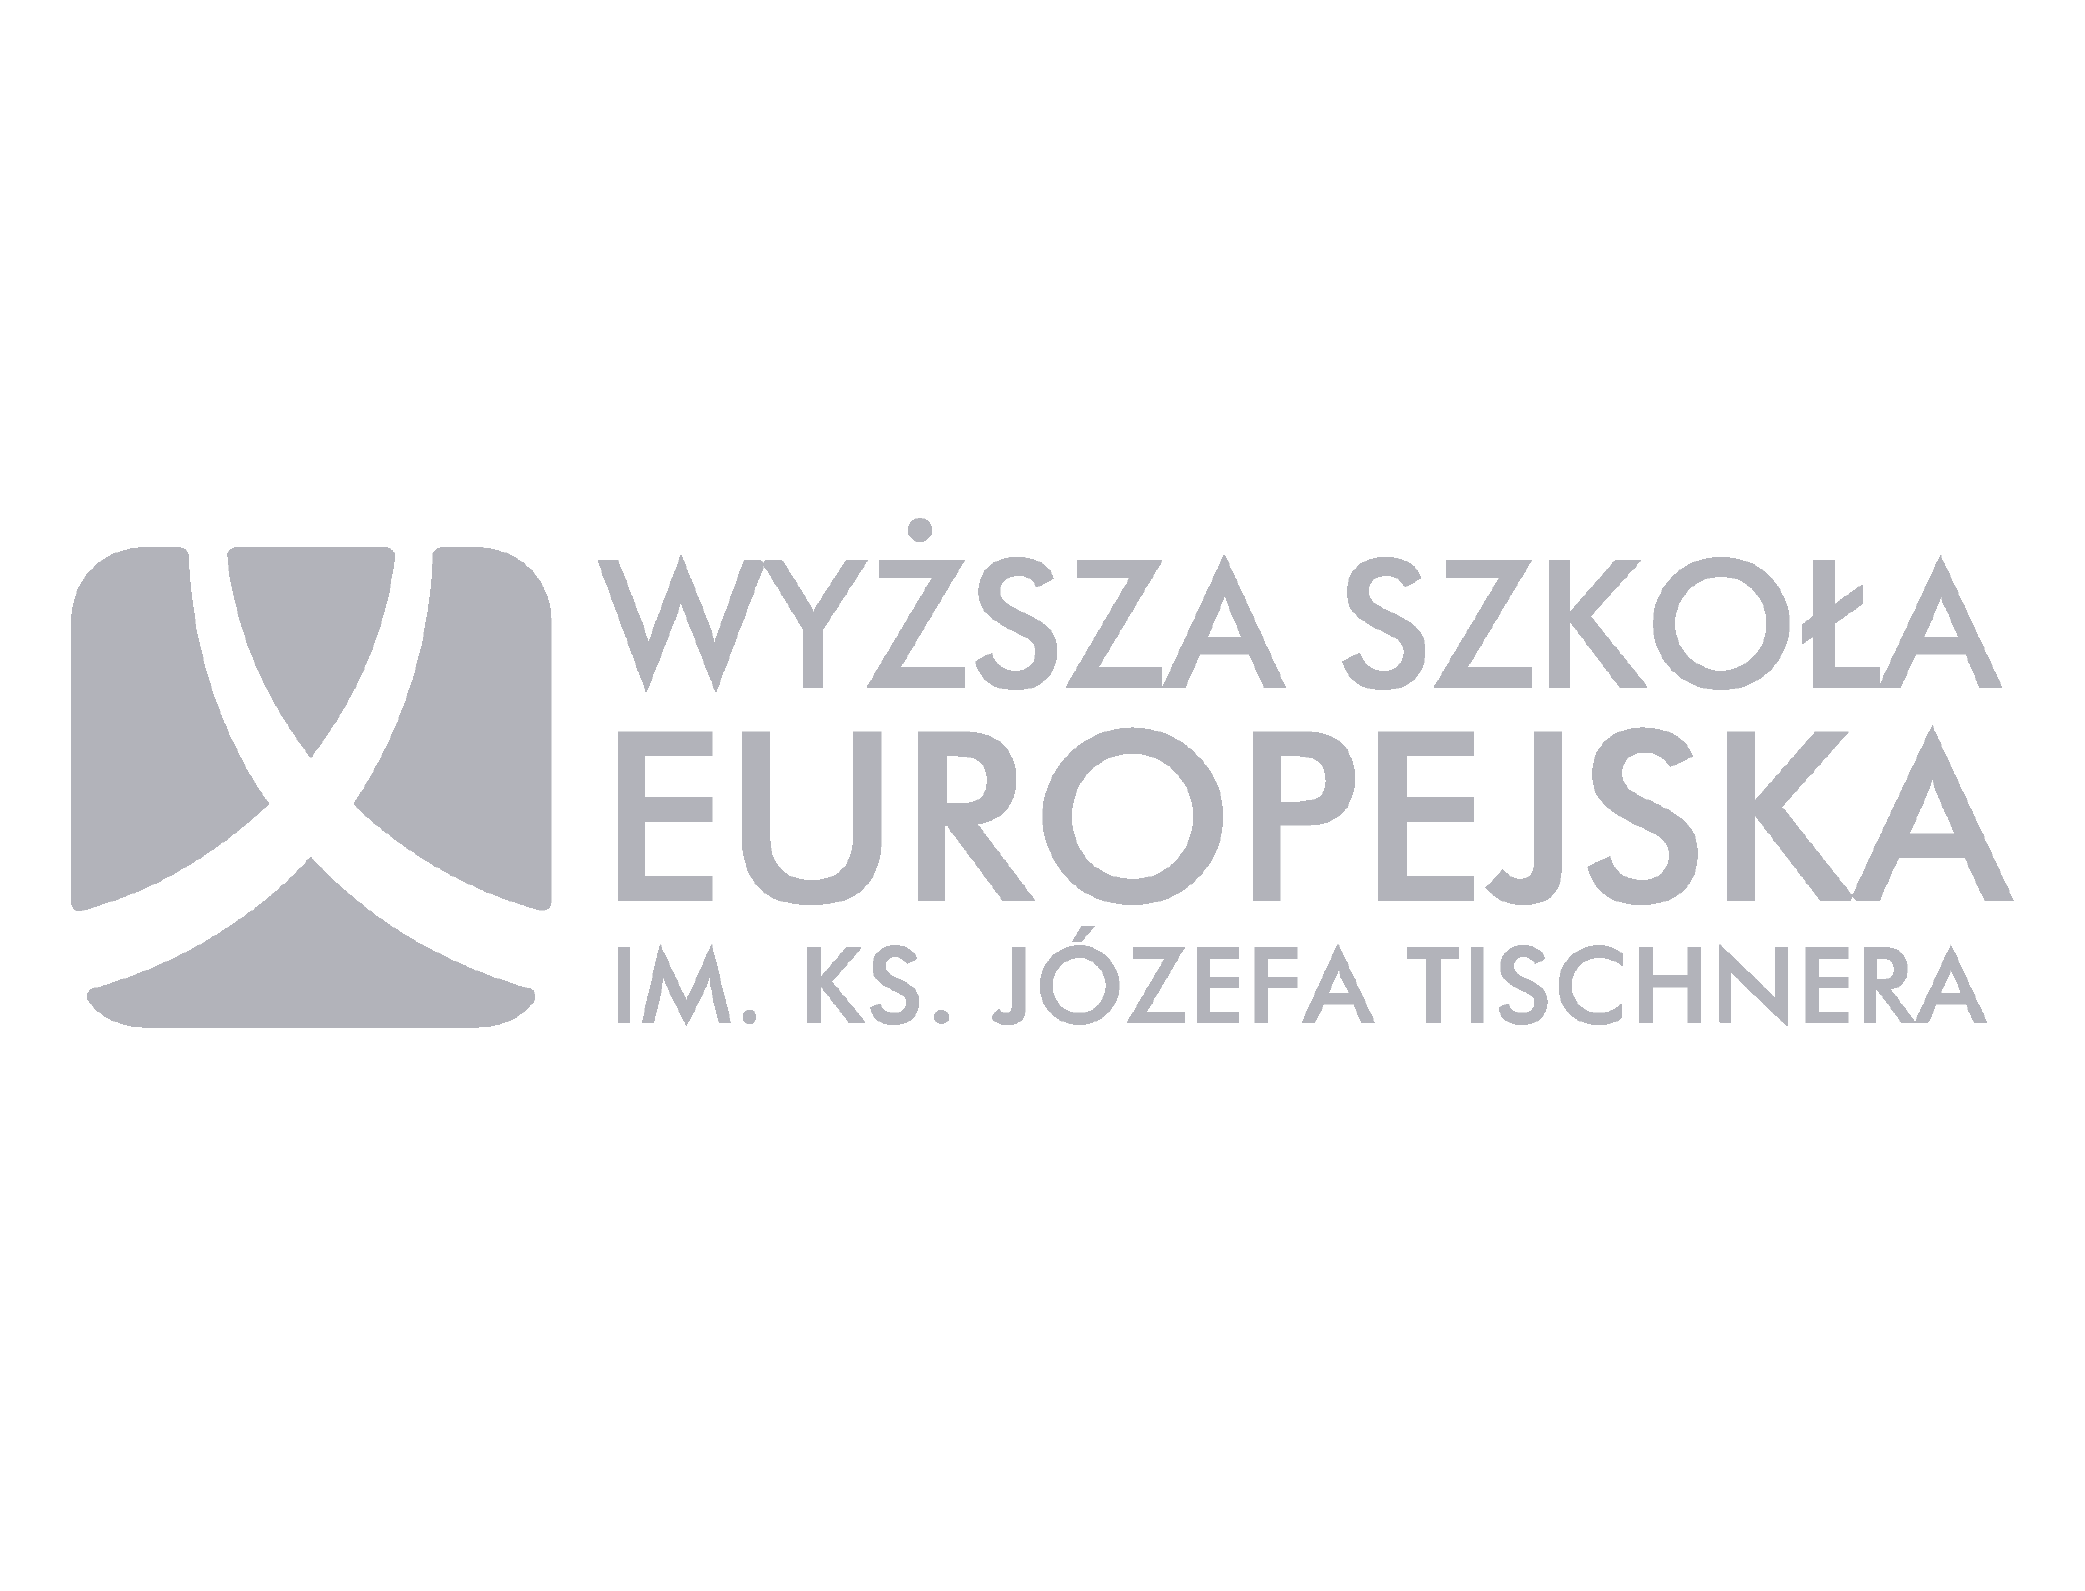 8Bit cooperates with Wyższa Szkoła Europejska / Tischner European University in Cracow